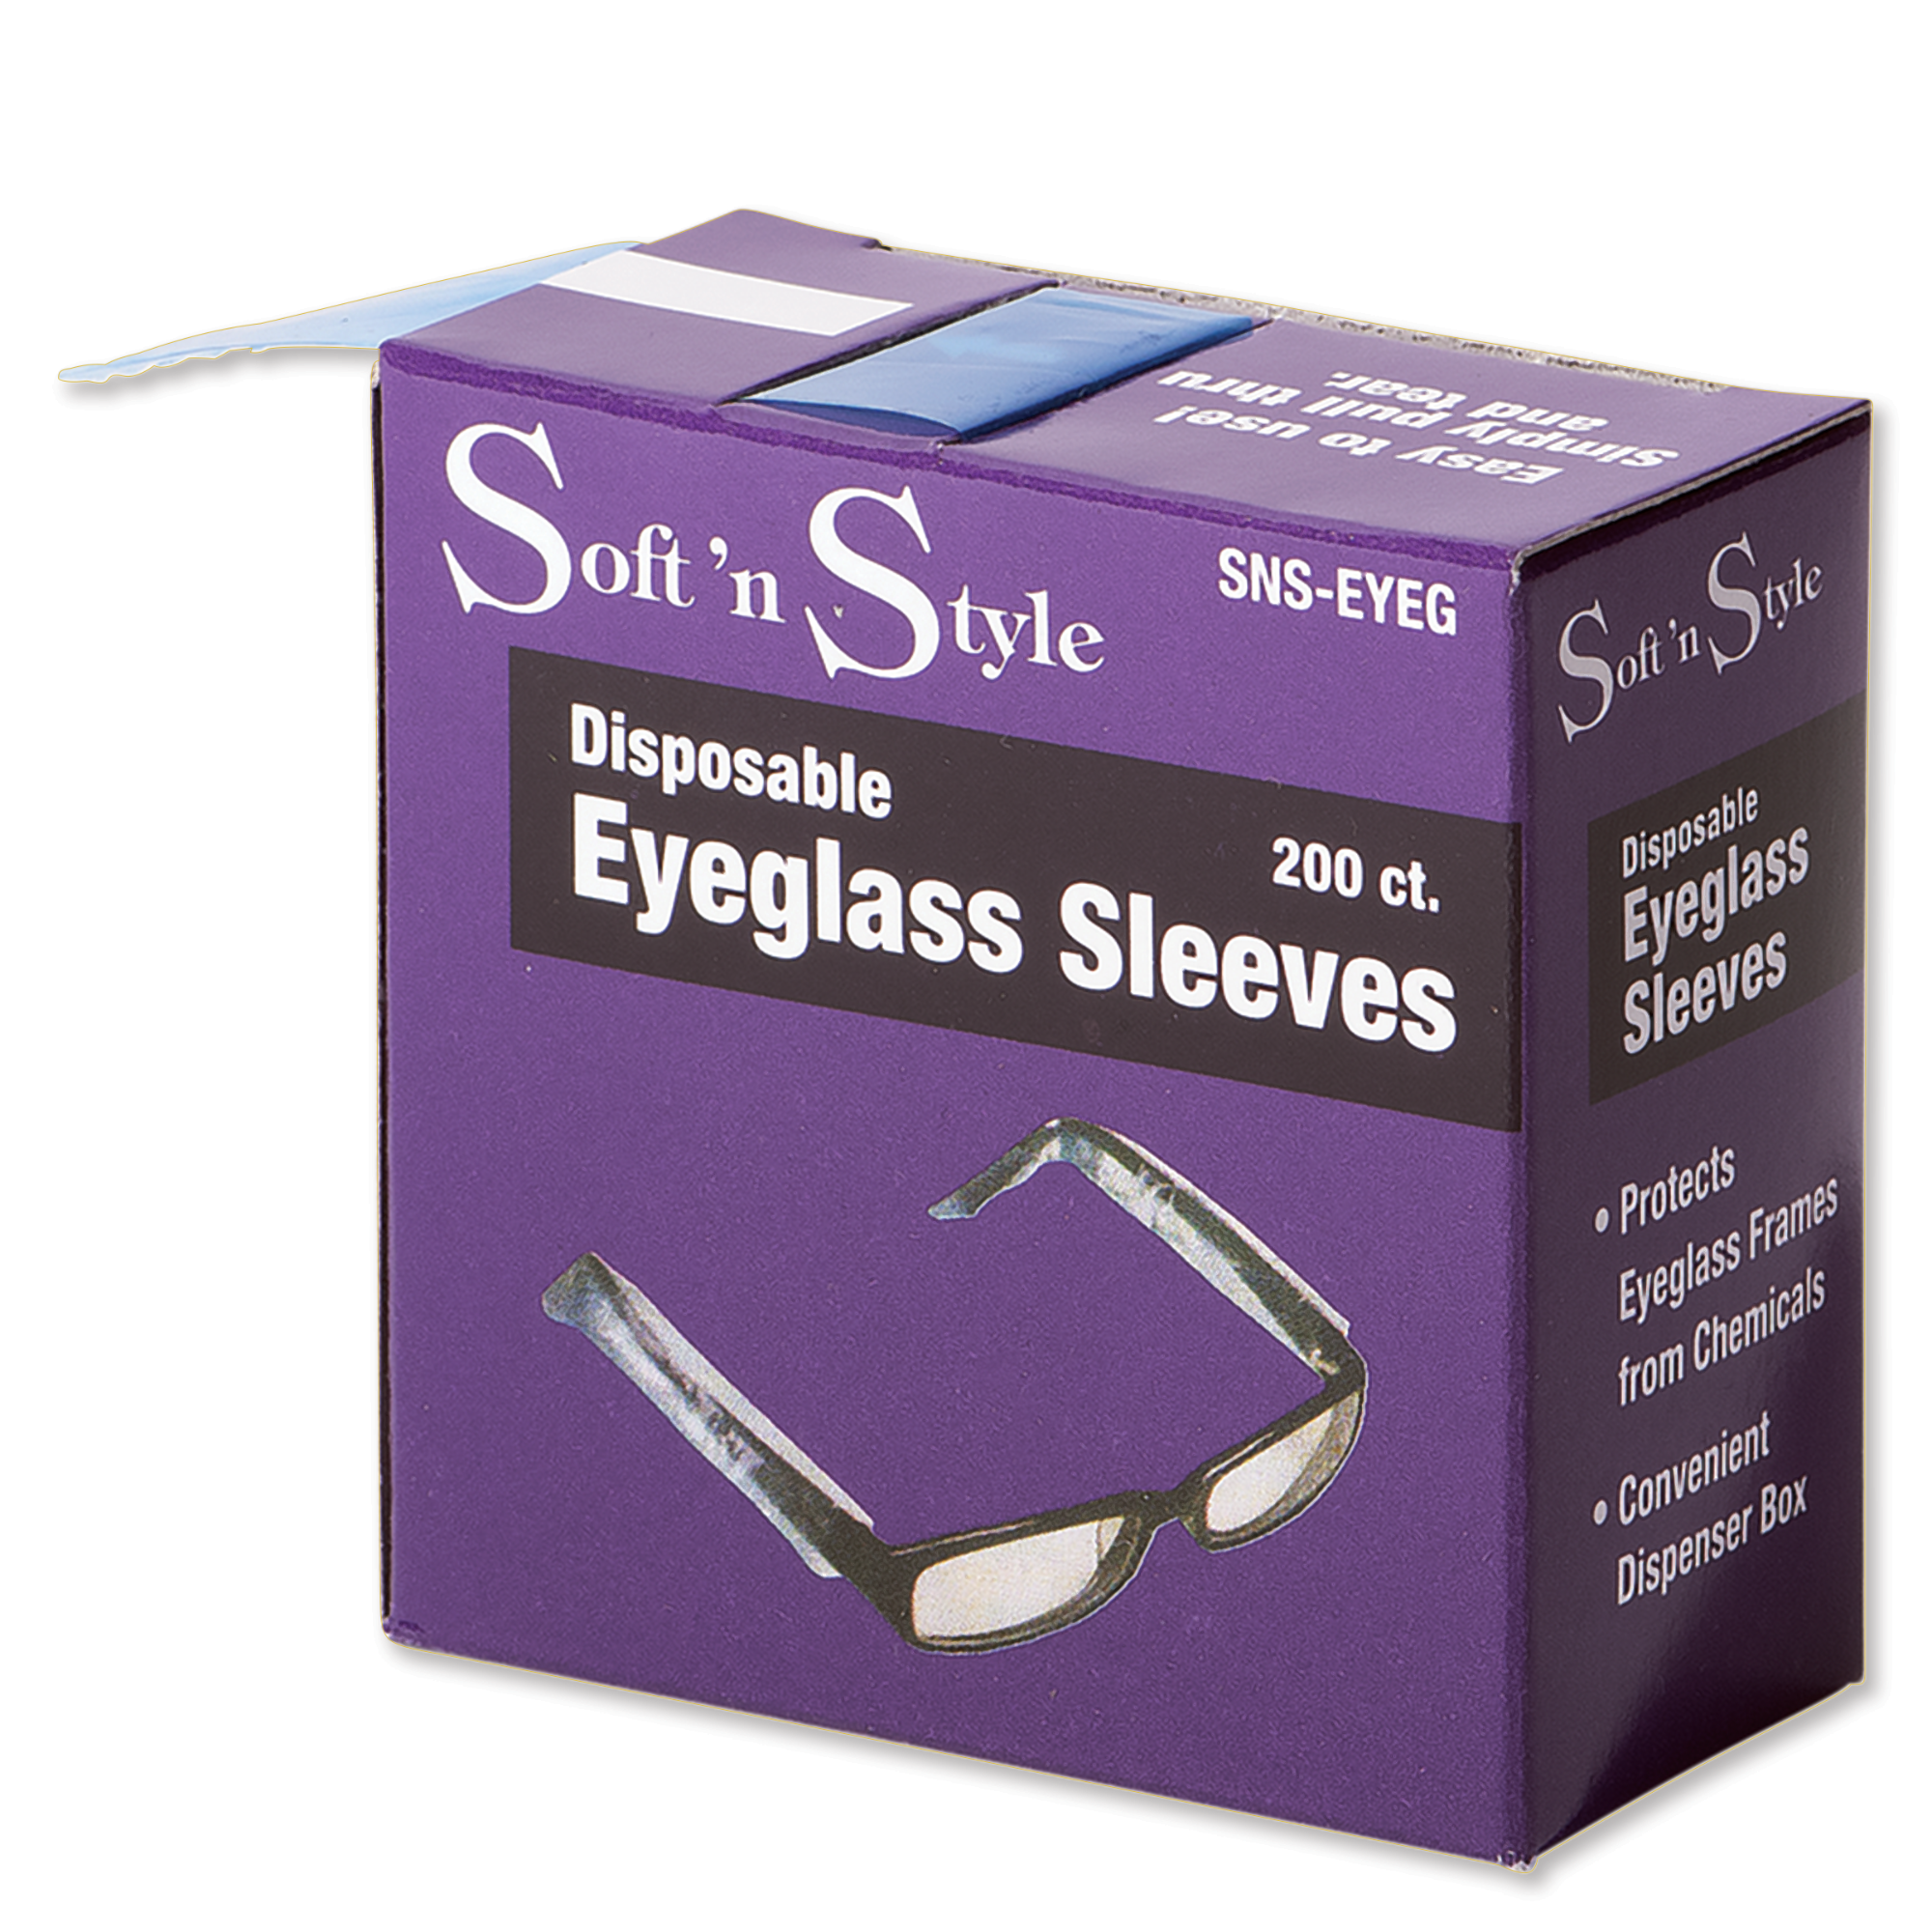 Disposable Eyeglasses Sleeves - 200 ct.